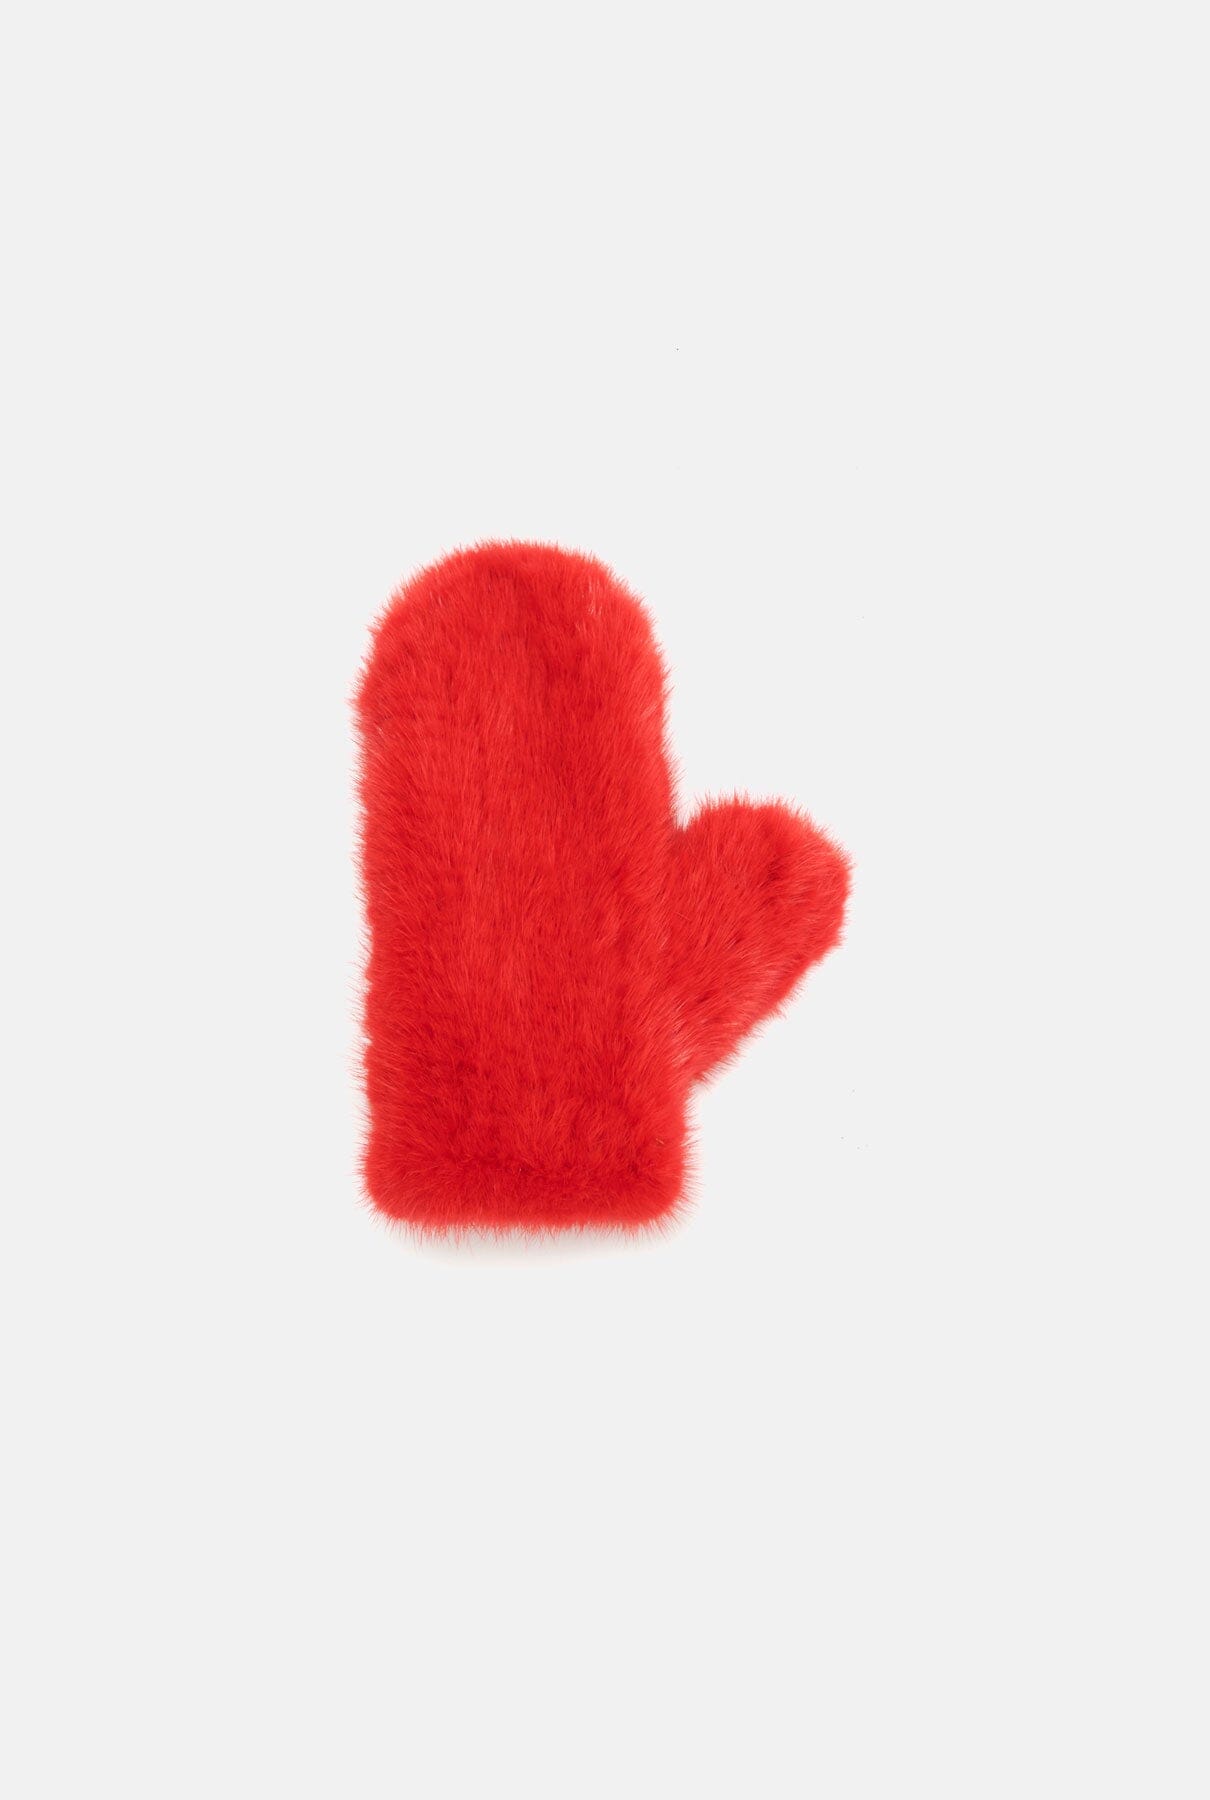 Iceberg mittens bright red Gloves Baltei Studio 